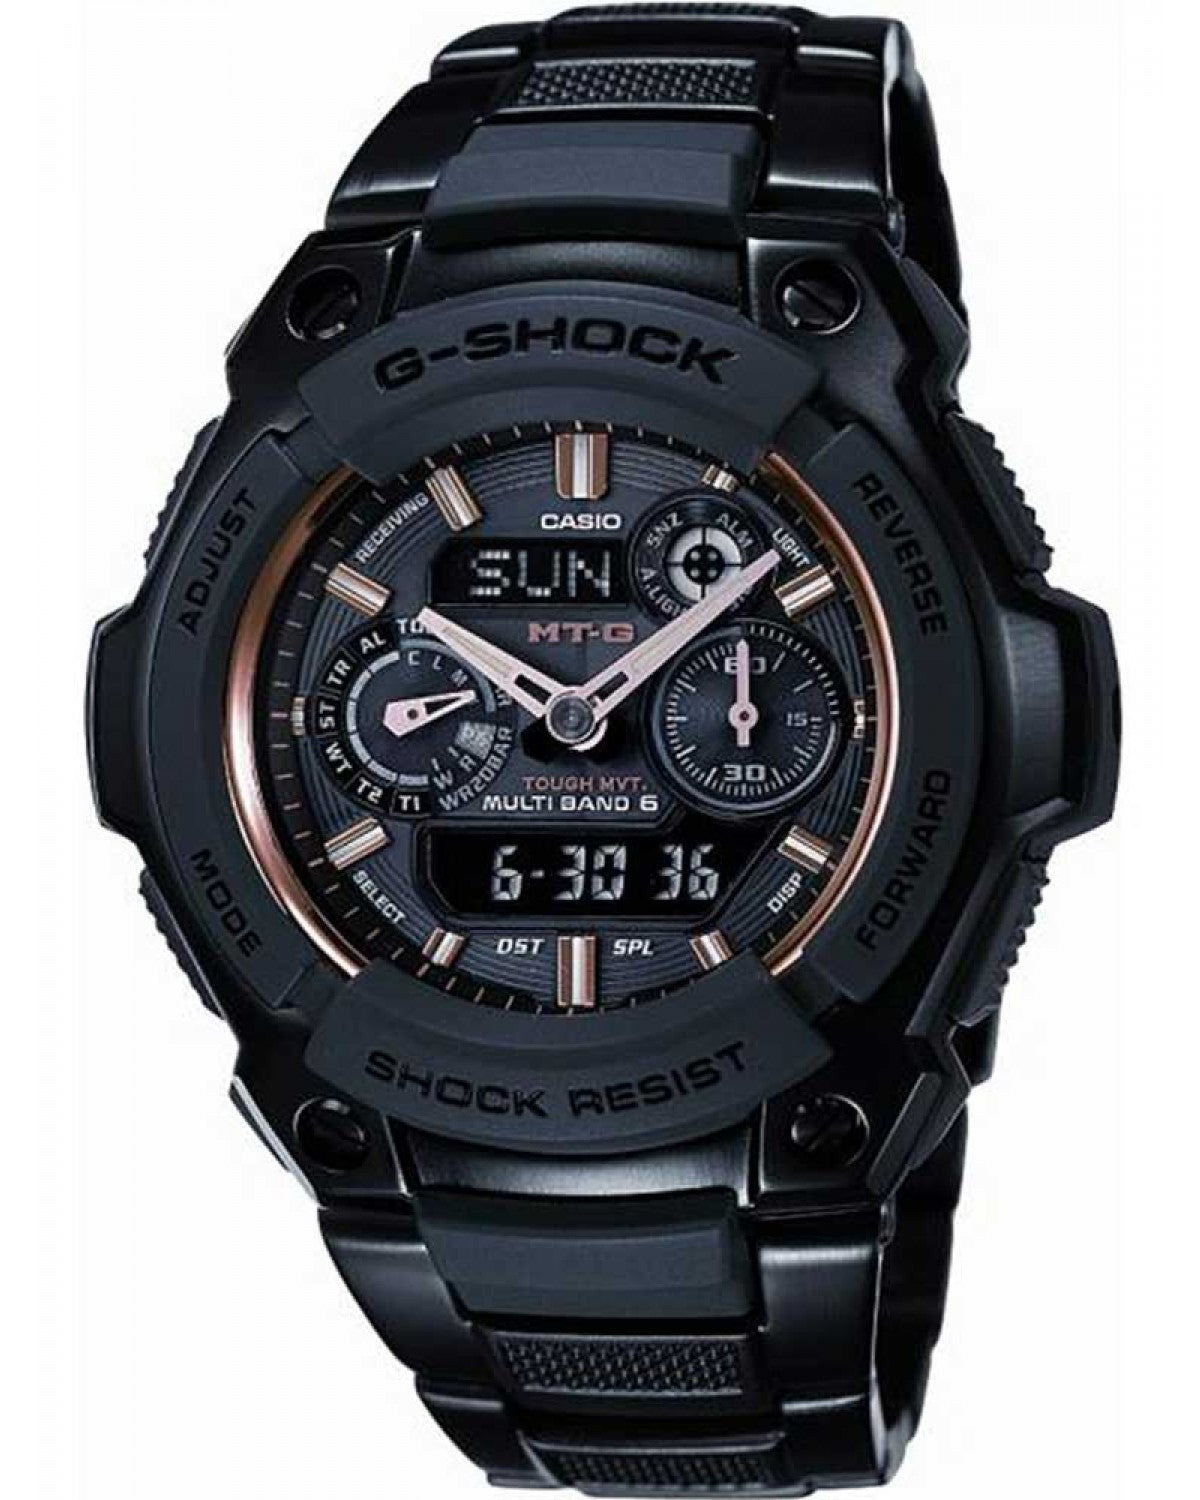 G-Shock Watch Premium M-TG D MTG-1500B-1A5ER Watch | Jura Watches